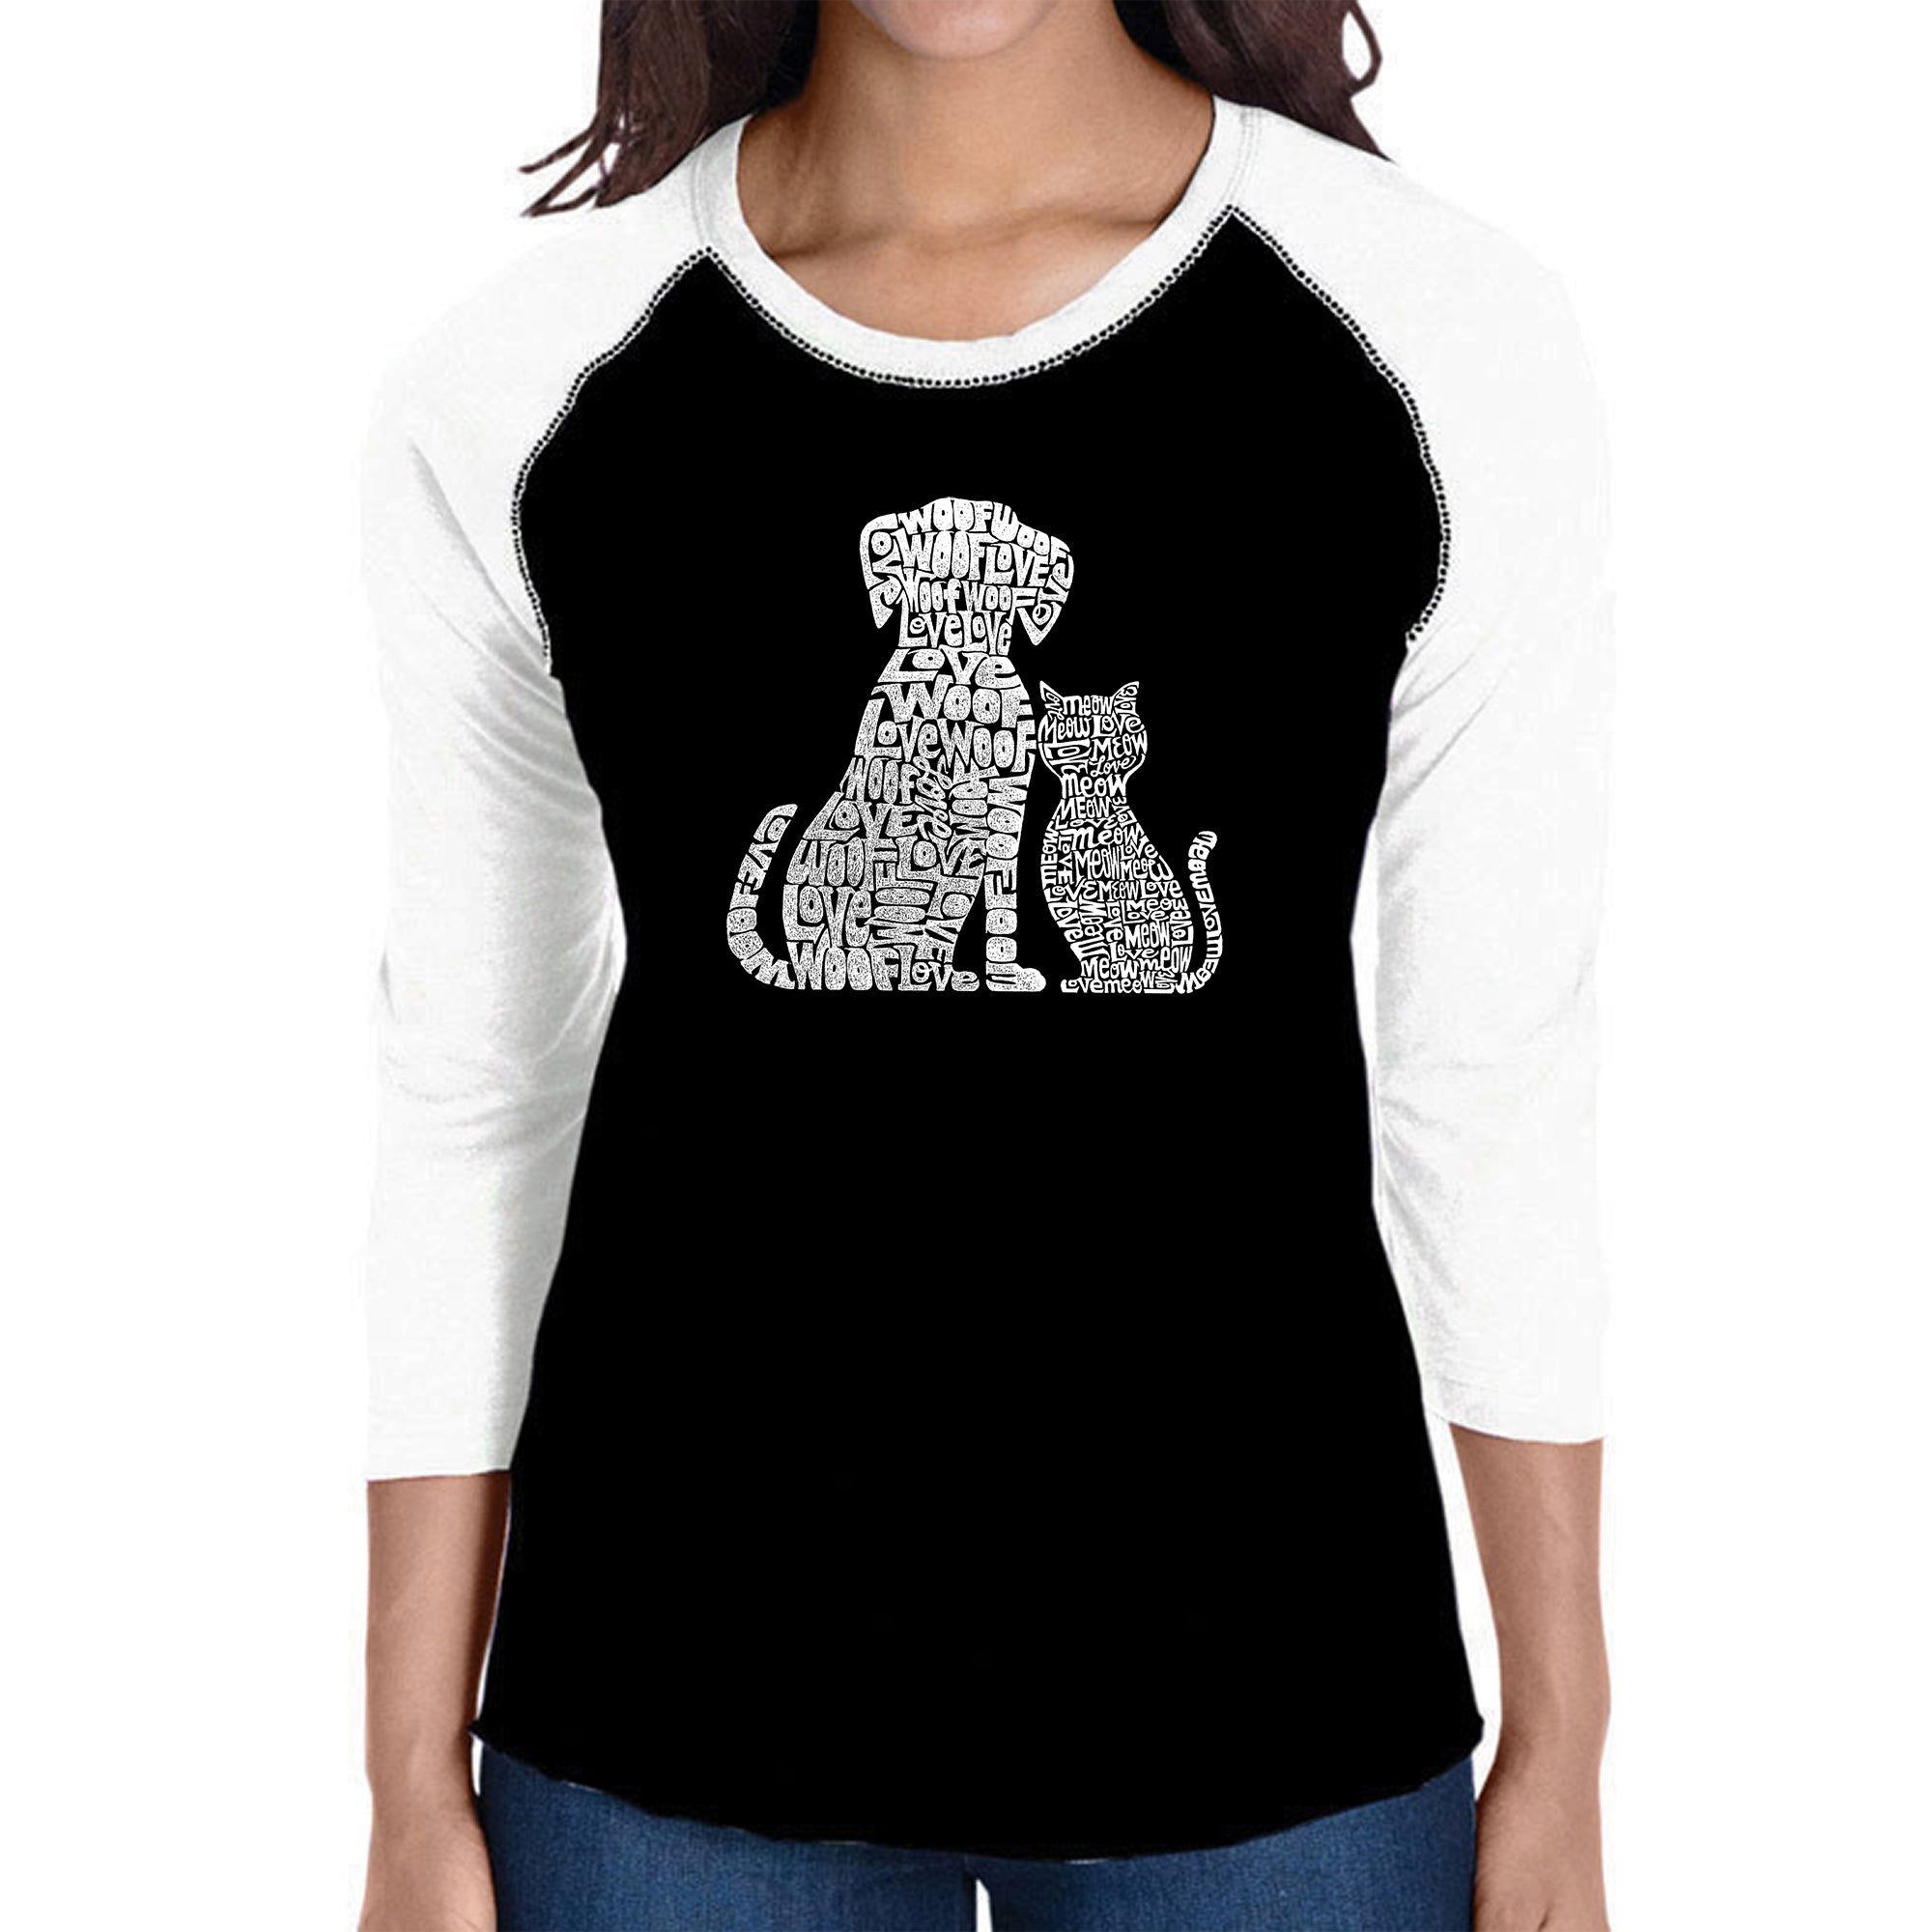 Dogs And Cats - Women's Raglan Baseball Word Art T-Shirt - Black/White - Large